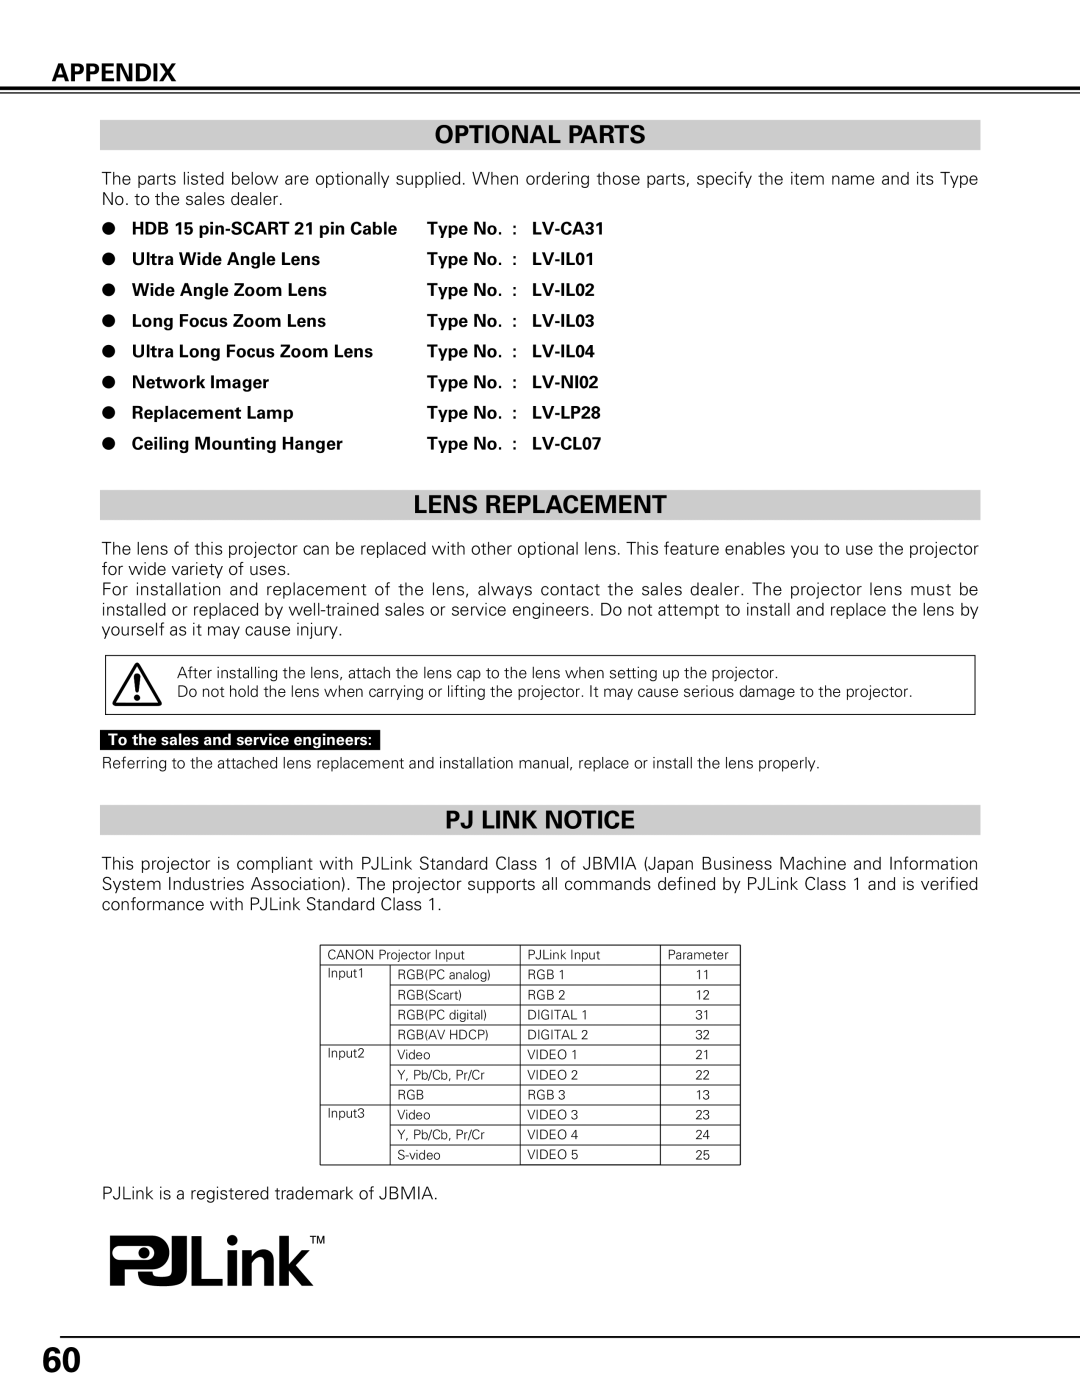 Canon LV-7575 user manual Appendix Optional Parts, Lens Replacement, Pj Link Notice 